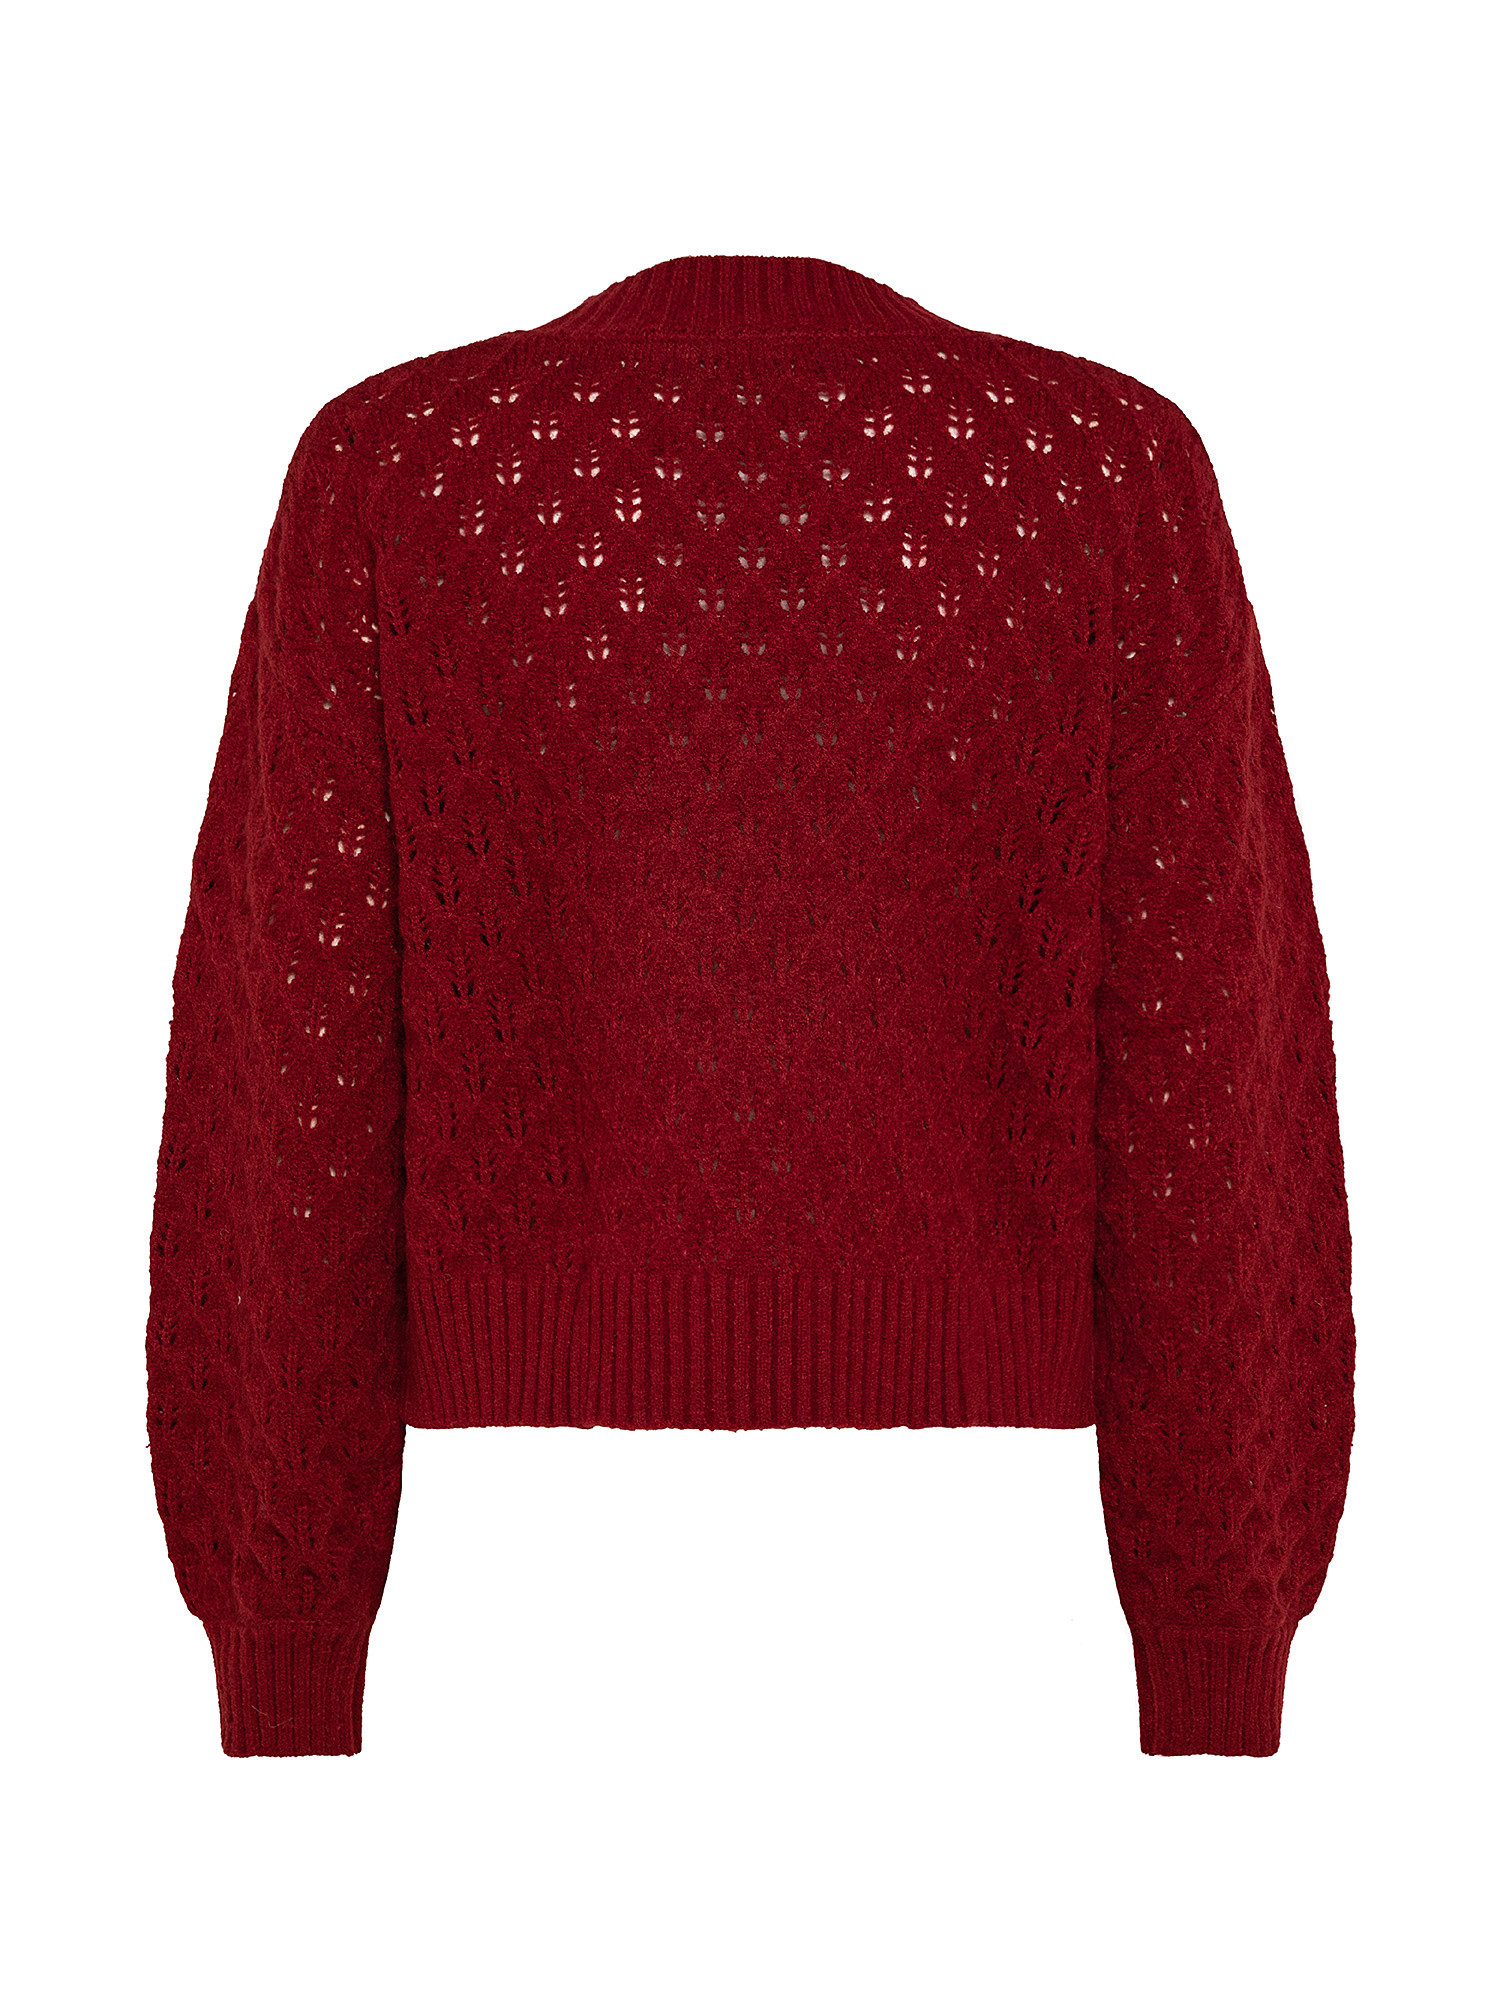 Beatrix crewneck pullover, Brick Red, large image number 1